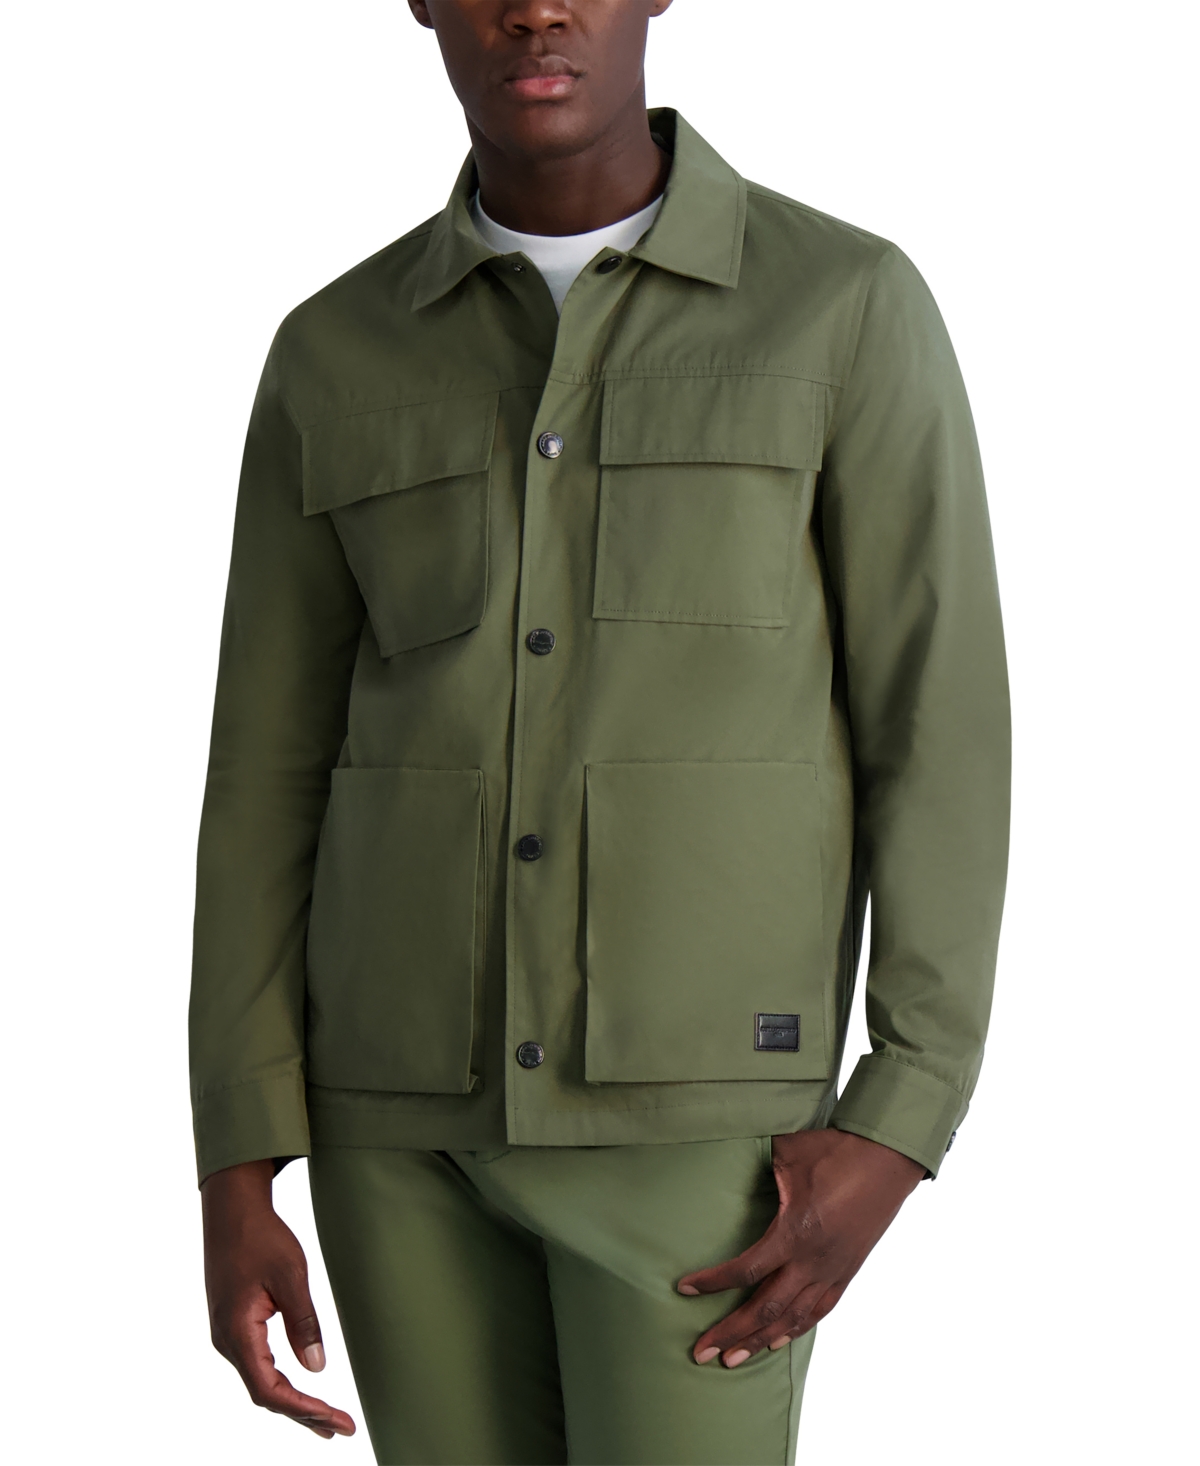 Karl Lagerfeld Paris Men's Four Pocket Safari Jacket - Green - Size Medium - Olive